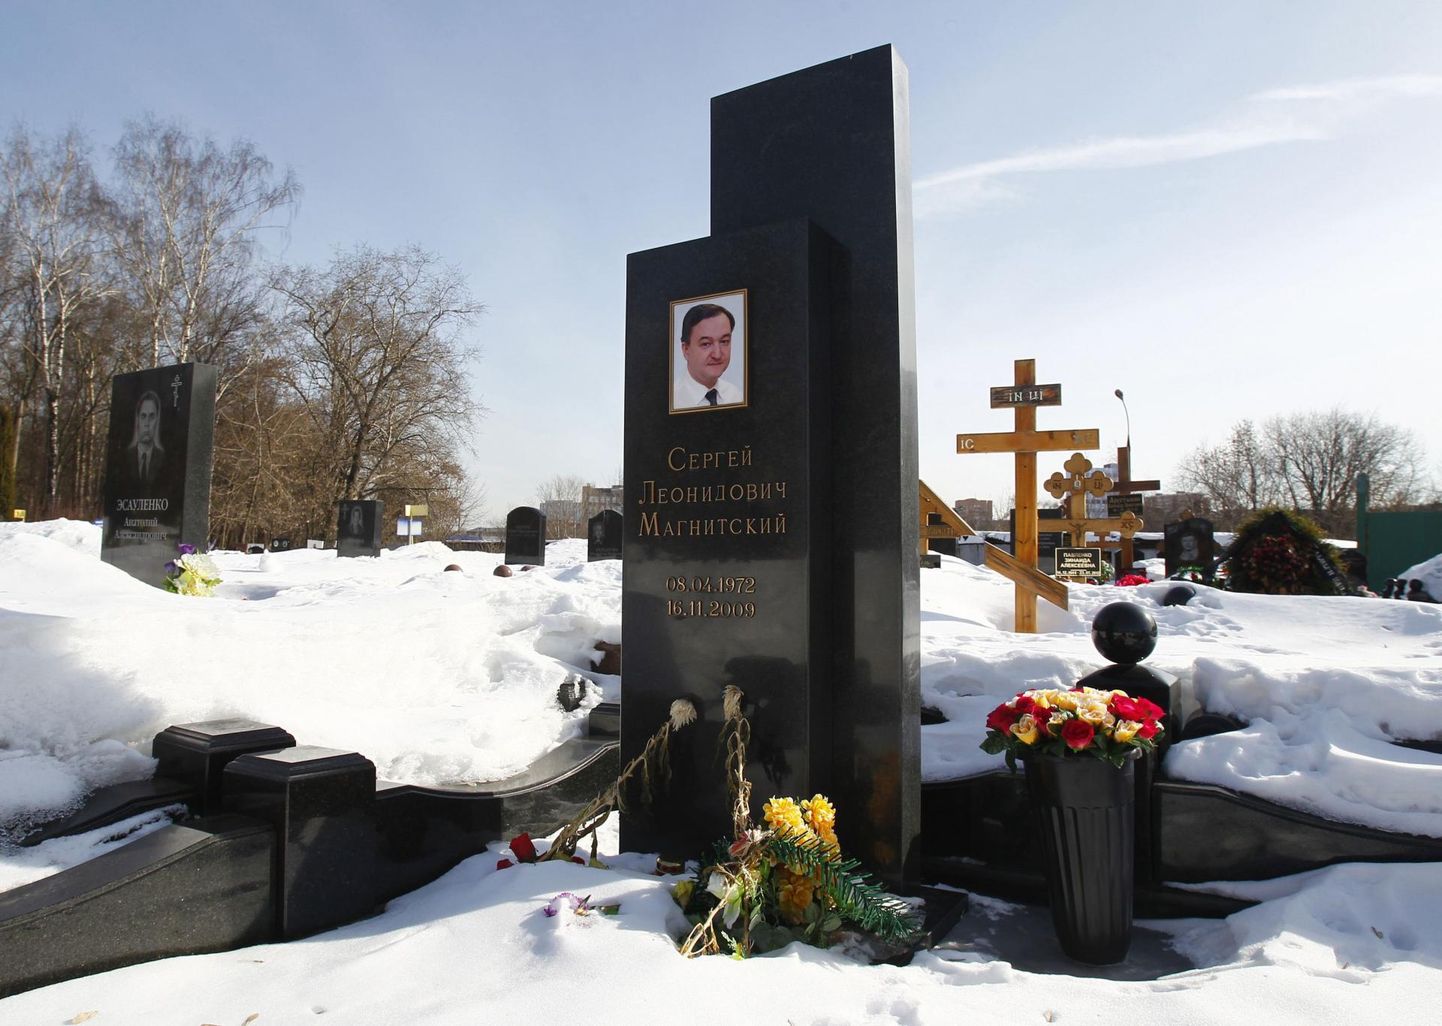 Sergei Magnitski haud.